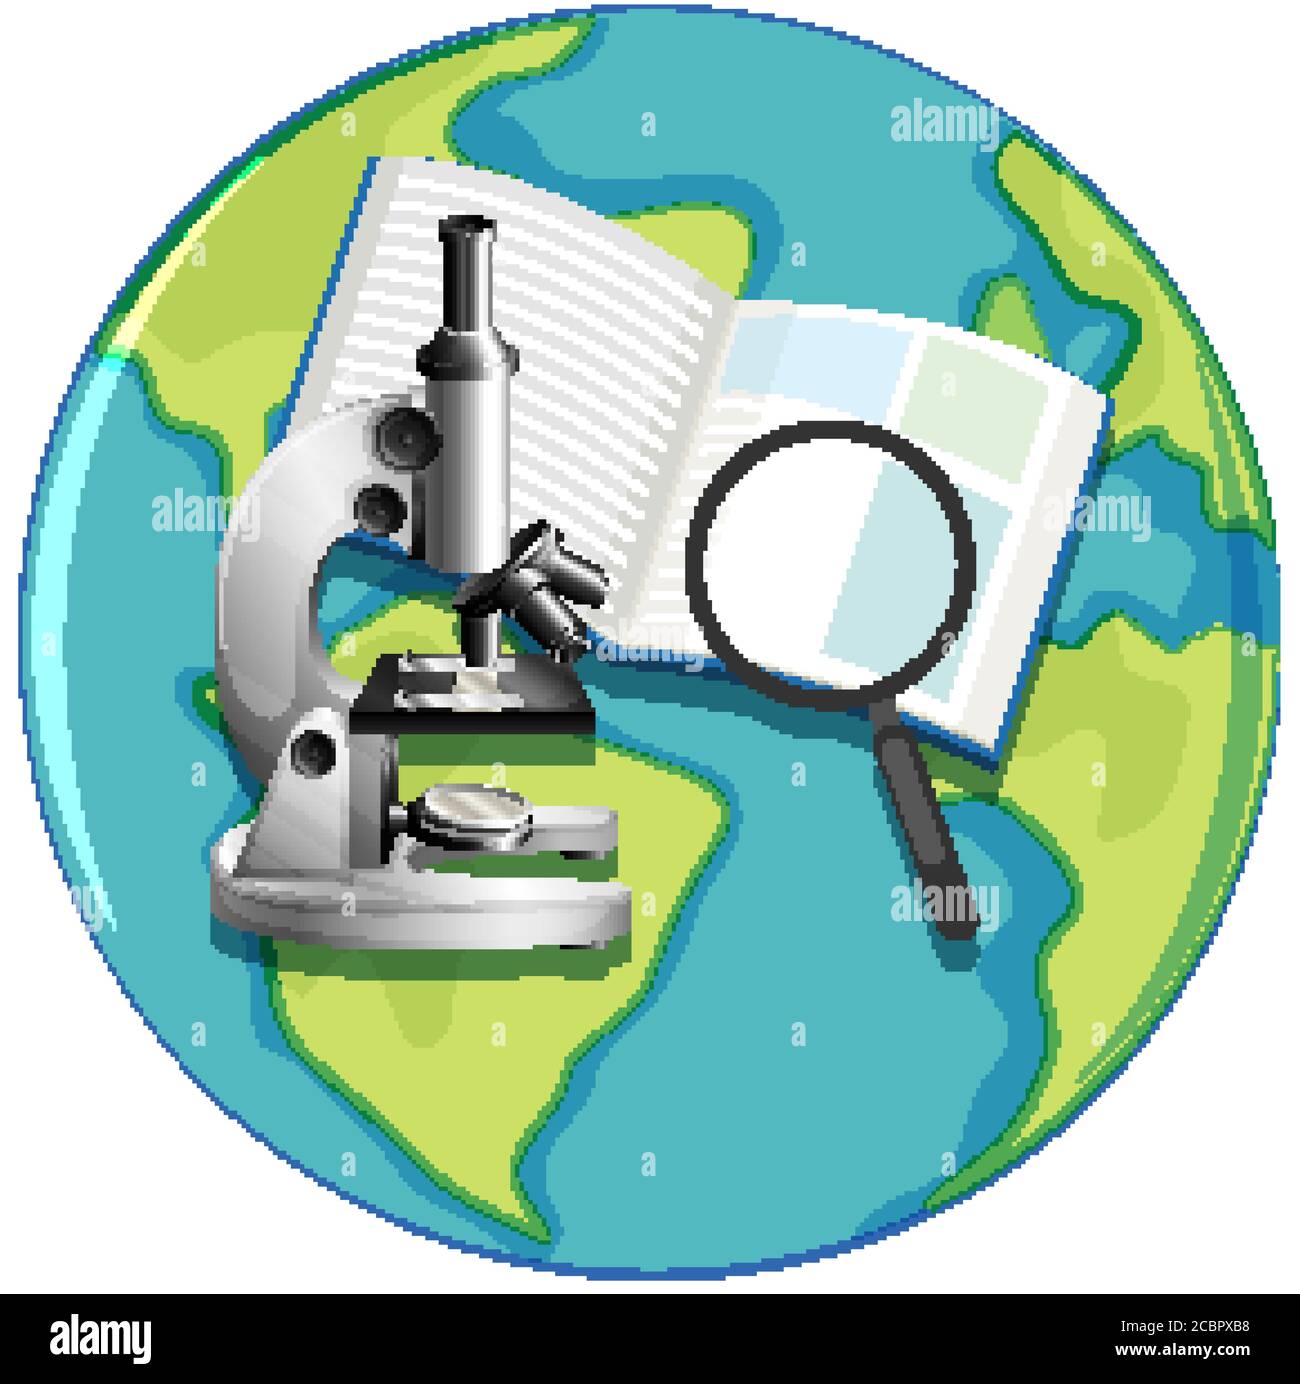 Earth globe icon with microscope cartoon style isolated illustration Stock  Vector Image & Art - Alamy